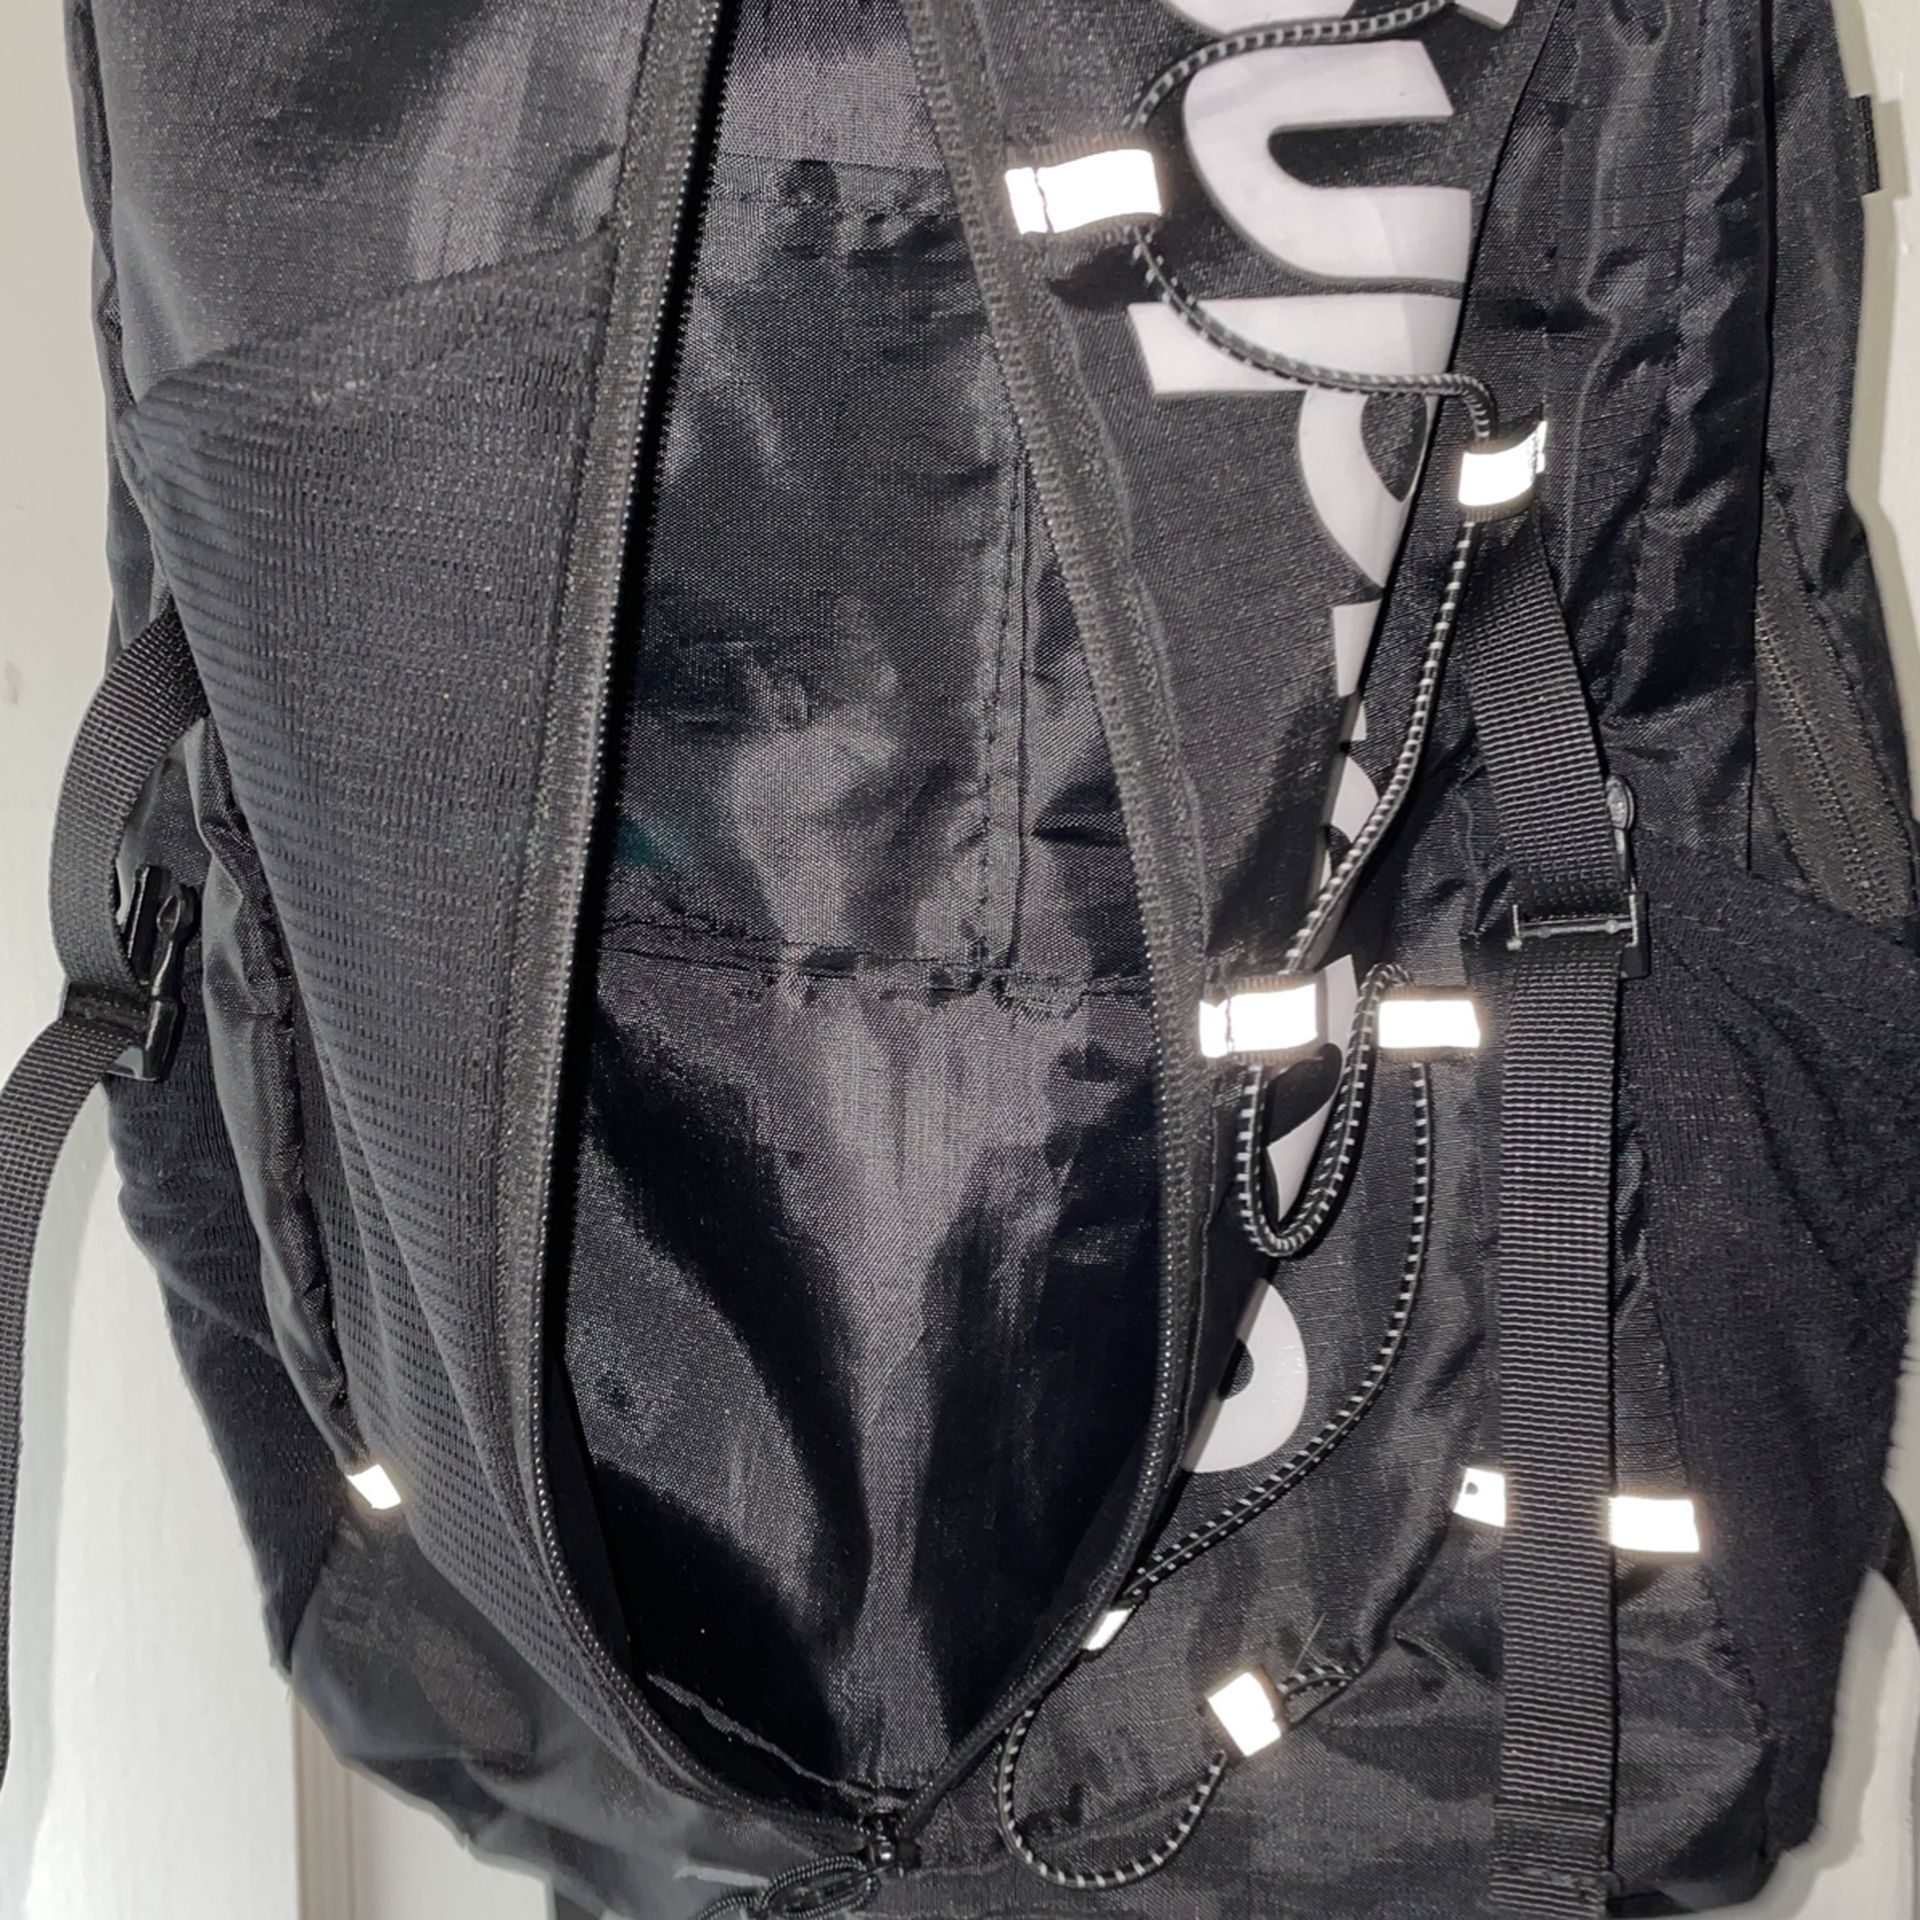 Supreme SS17 Backpack (cordura Fabric) 